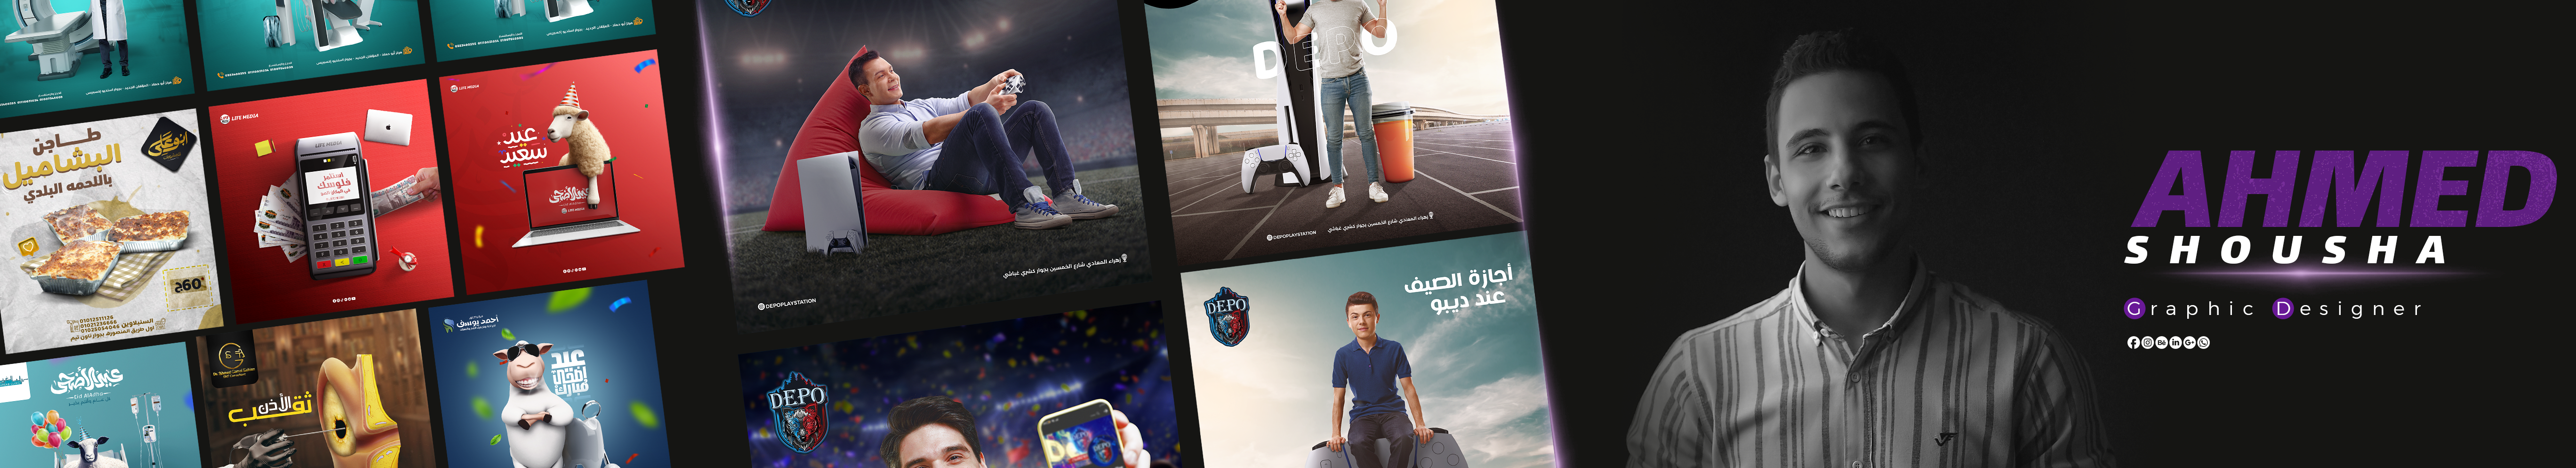 Ahmed Shousha ✪'s profile banner